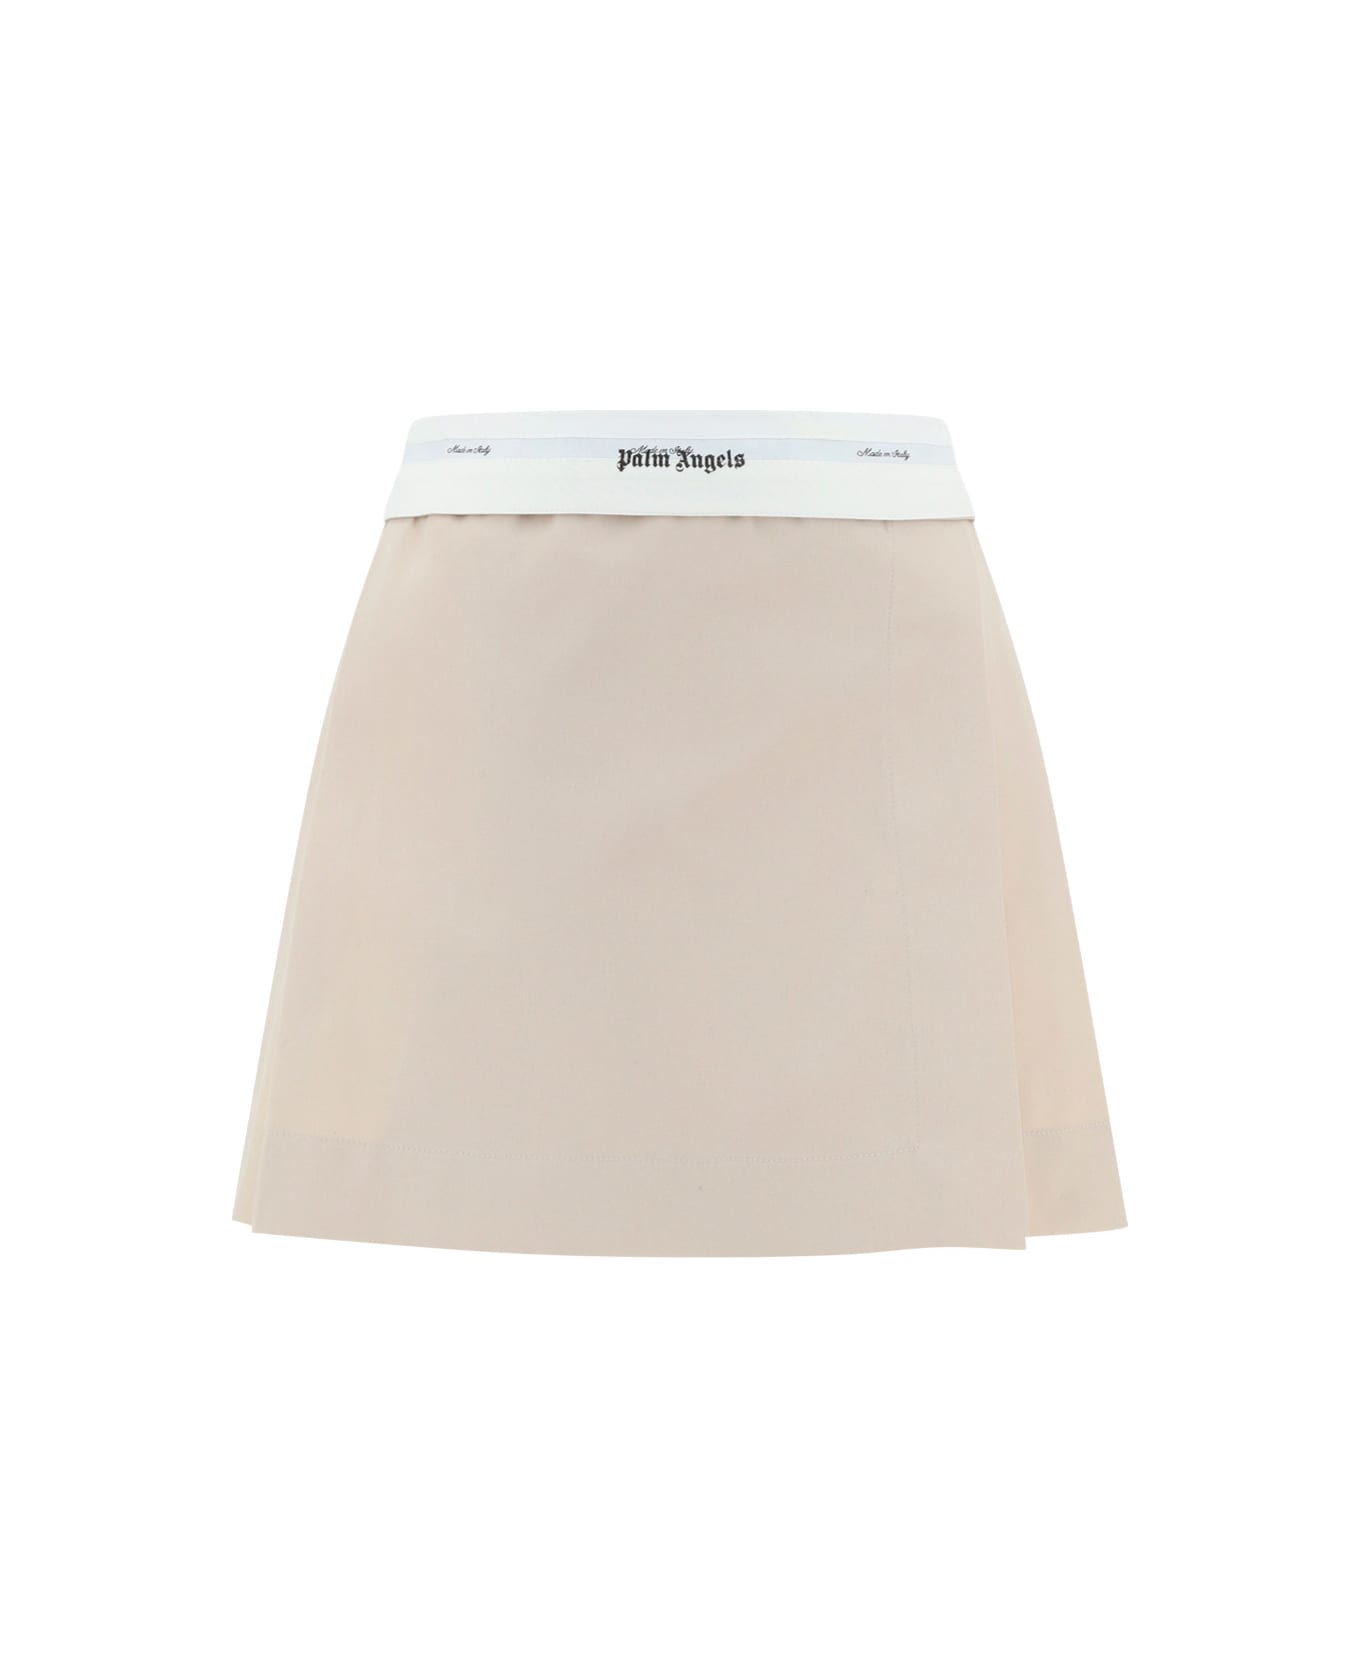 Palm Angels Miniskirt With Back Pleats - Beige/white スカート